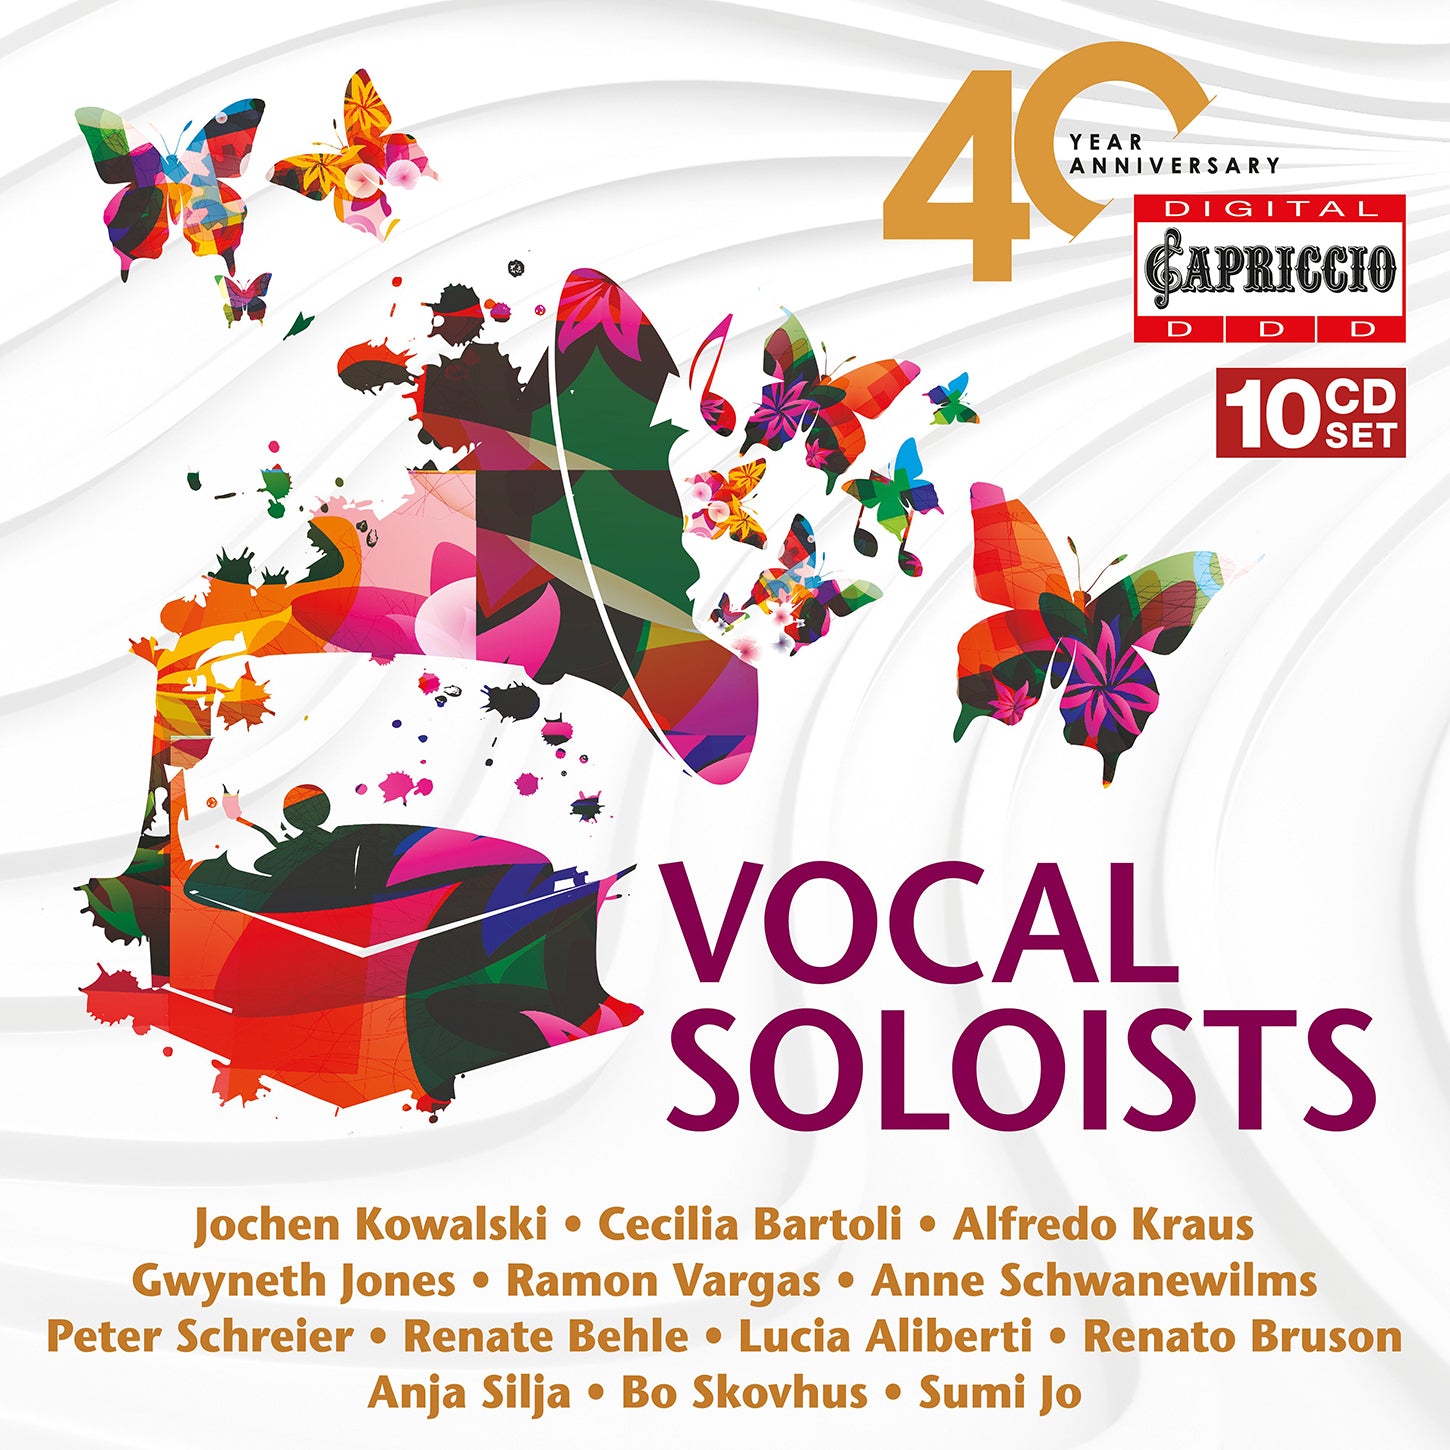 Capriccio's 40th Anniversary: Vocal Soloists from Bartoli to Vargas